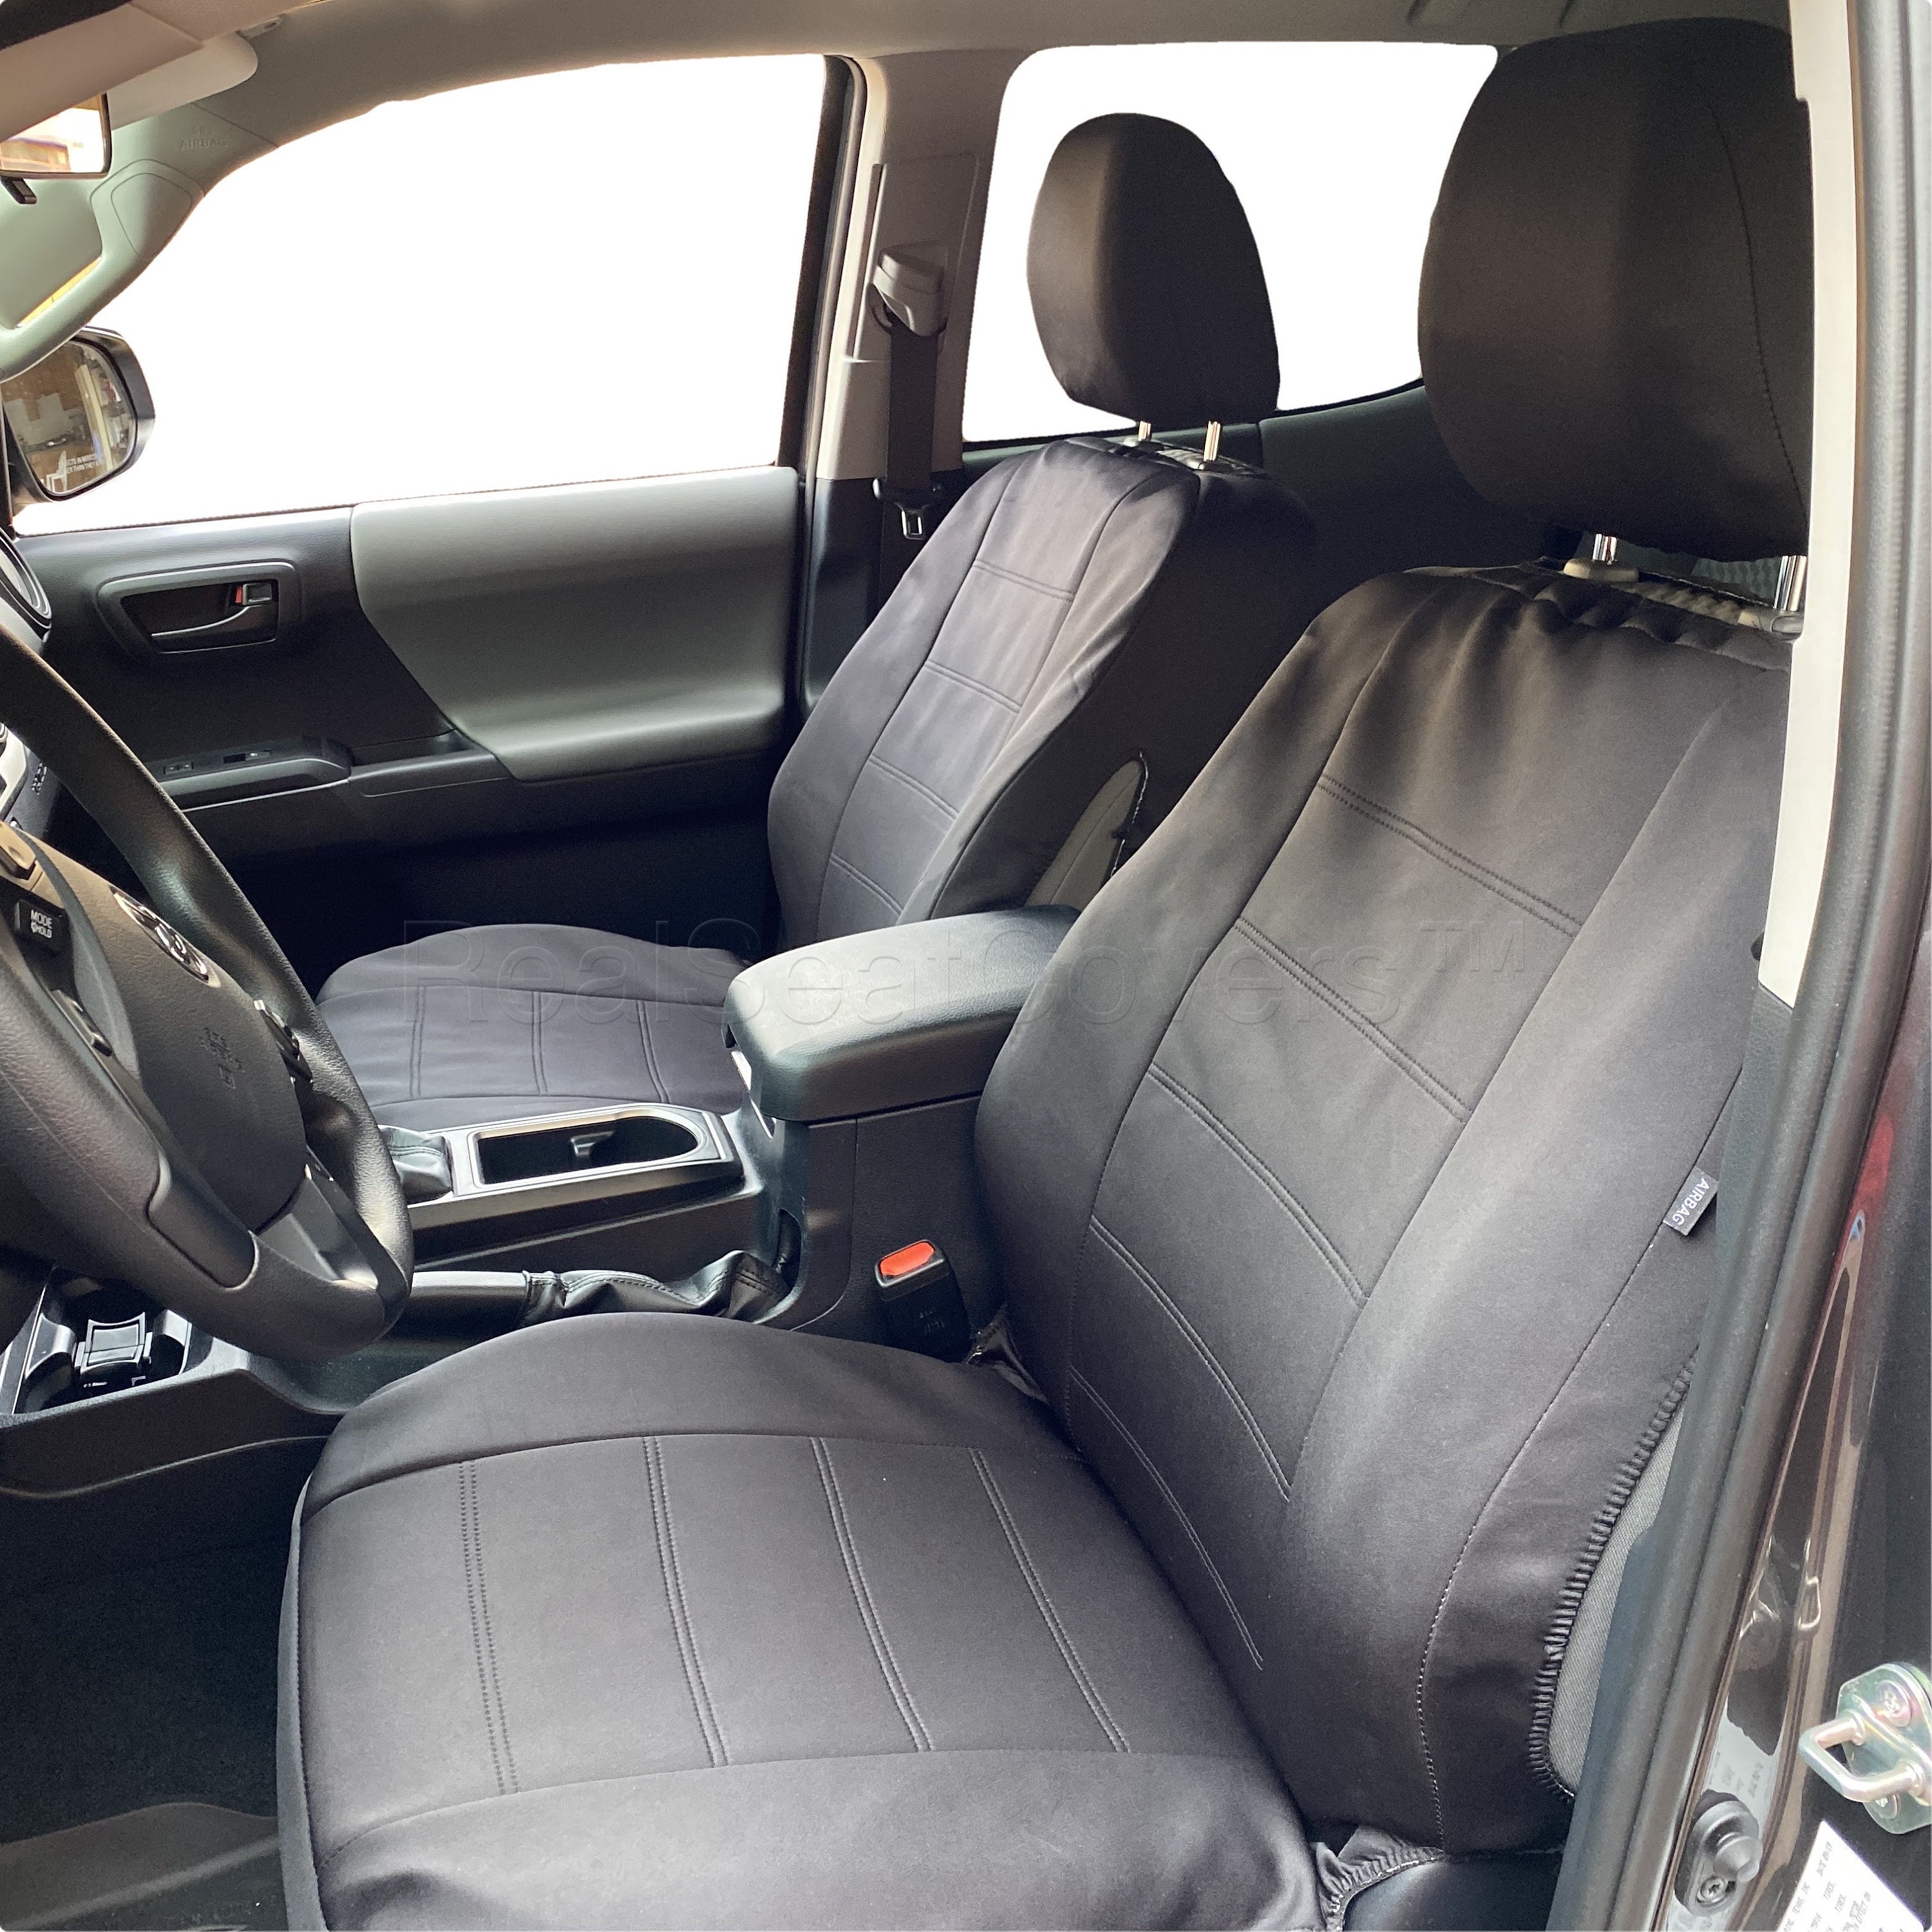 Neoprene High Back Bucket Seat Covers Clearance, SAVE 42%